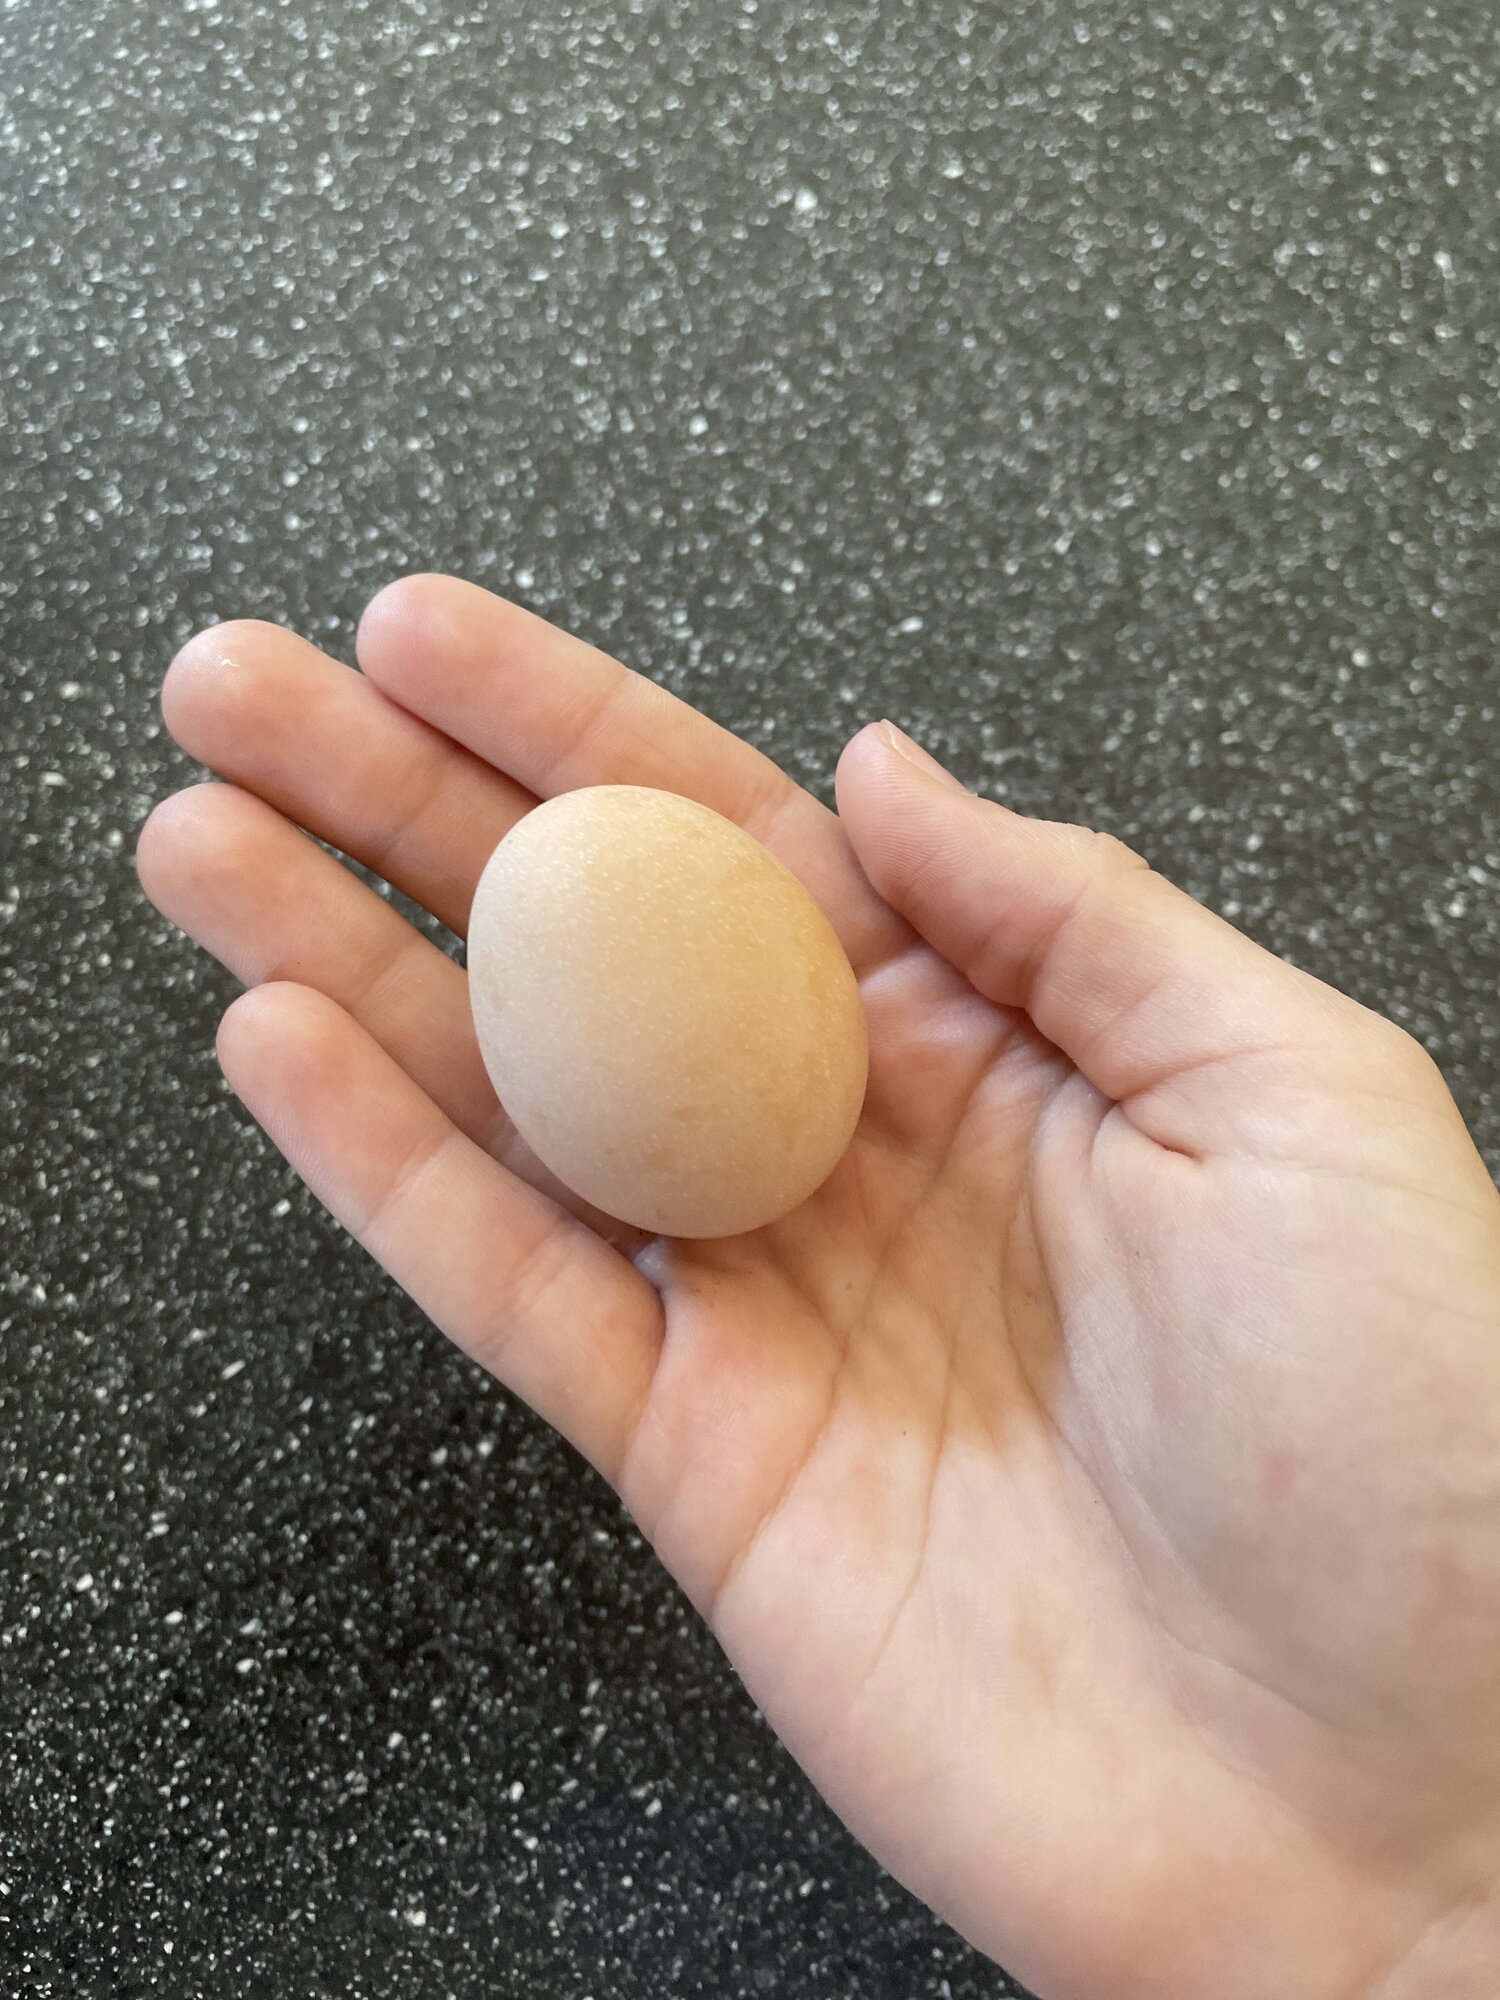 First Egg!